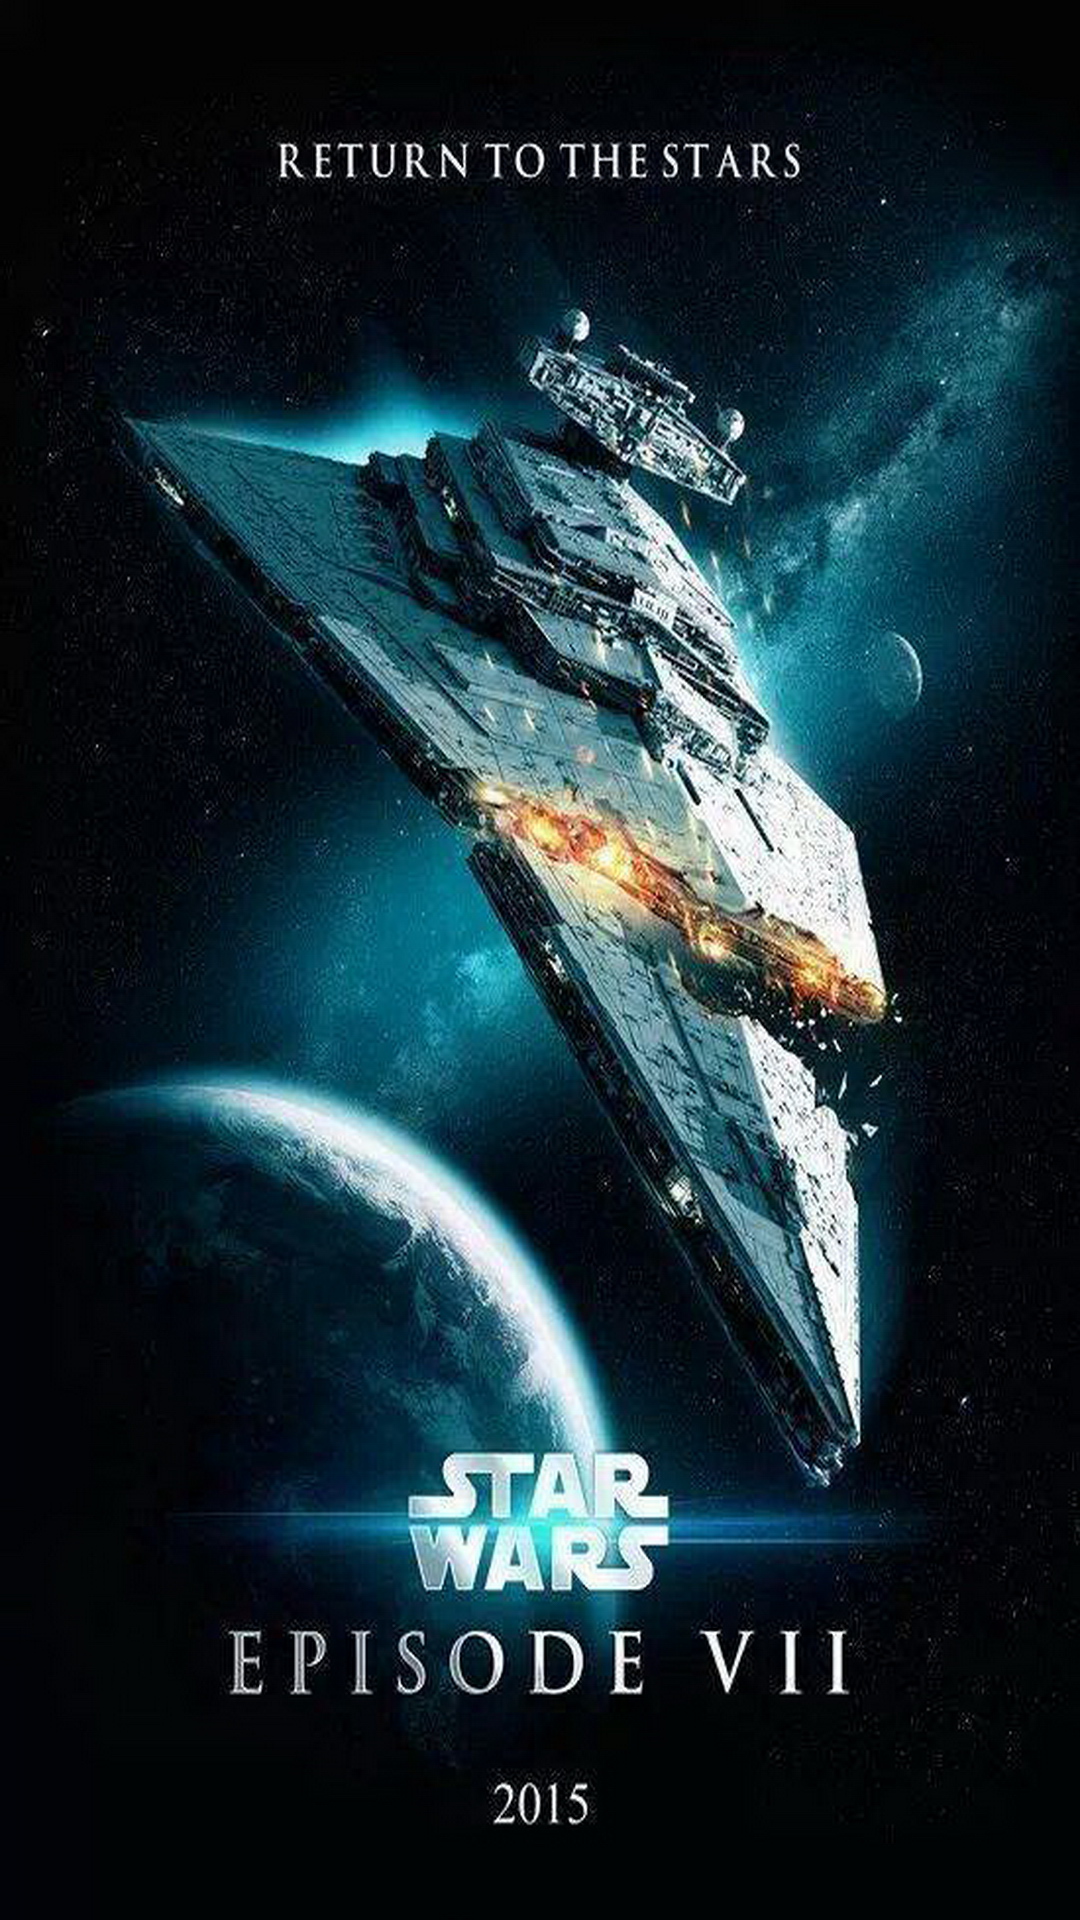 Star Wars Episode Vii Photos Of Epic iPhone Wallpaper